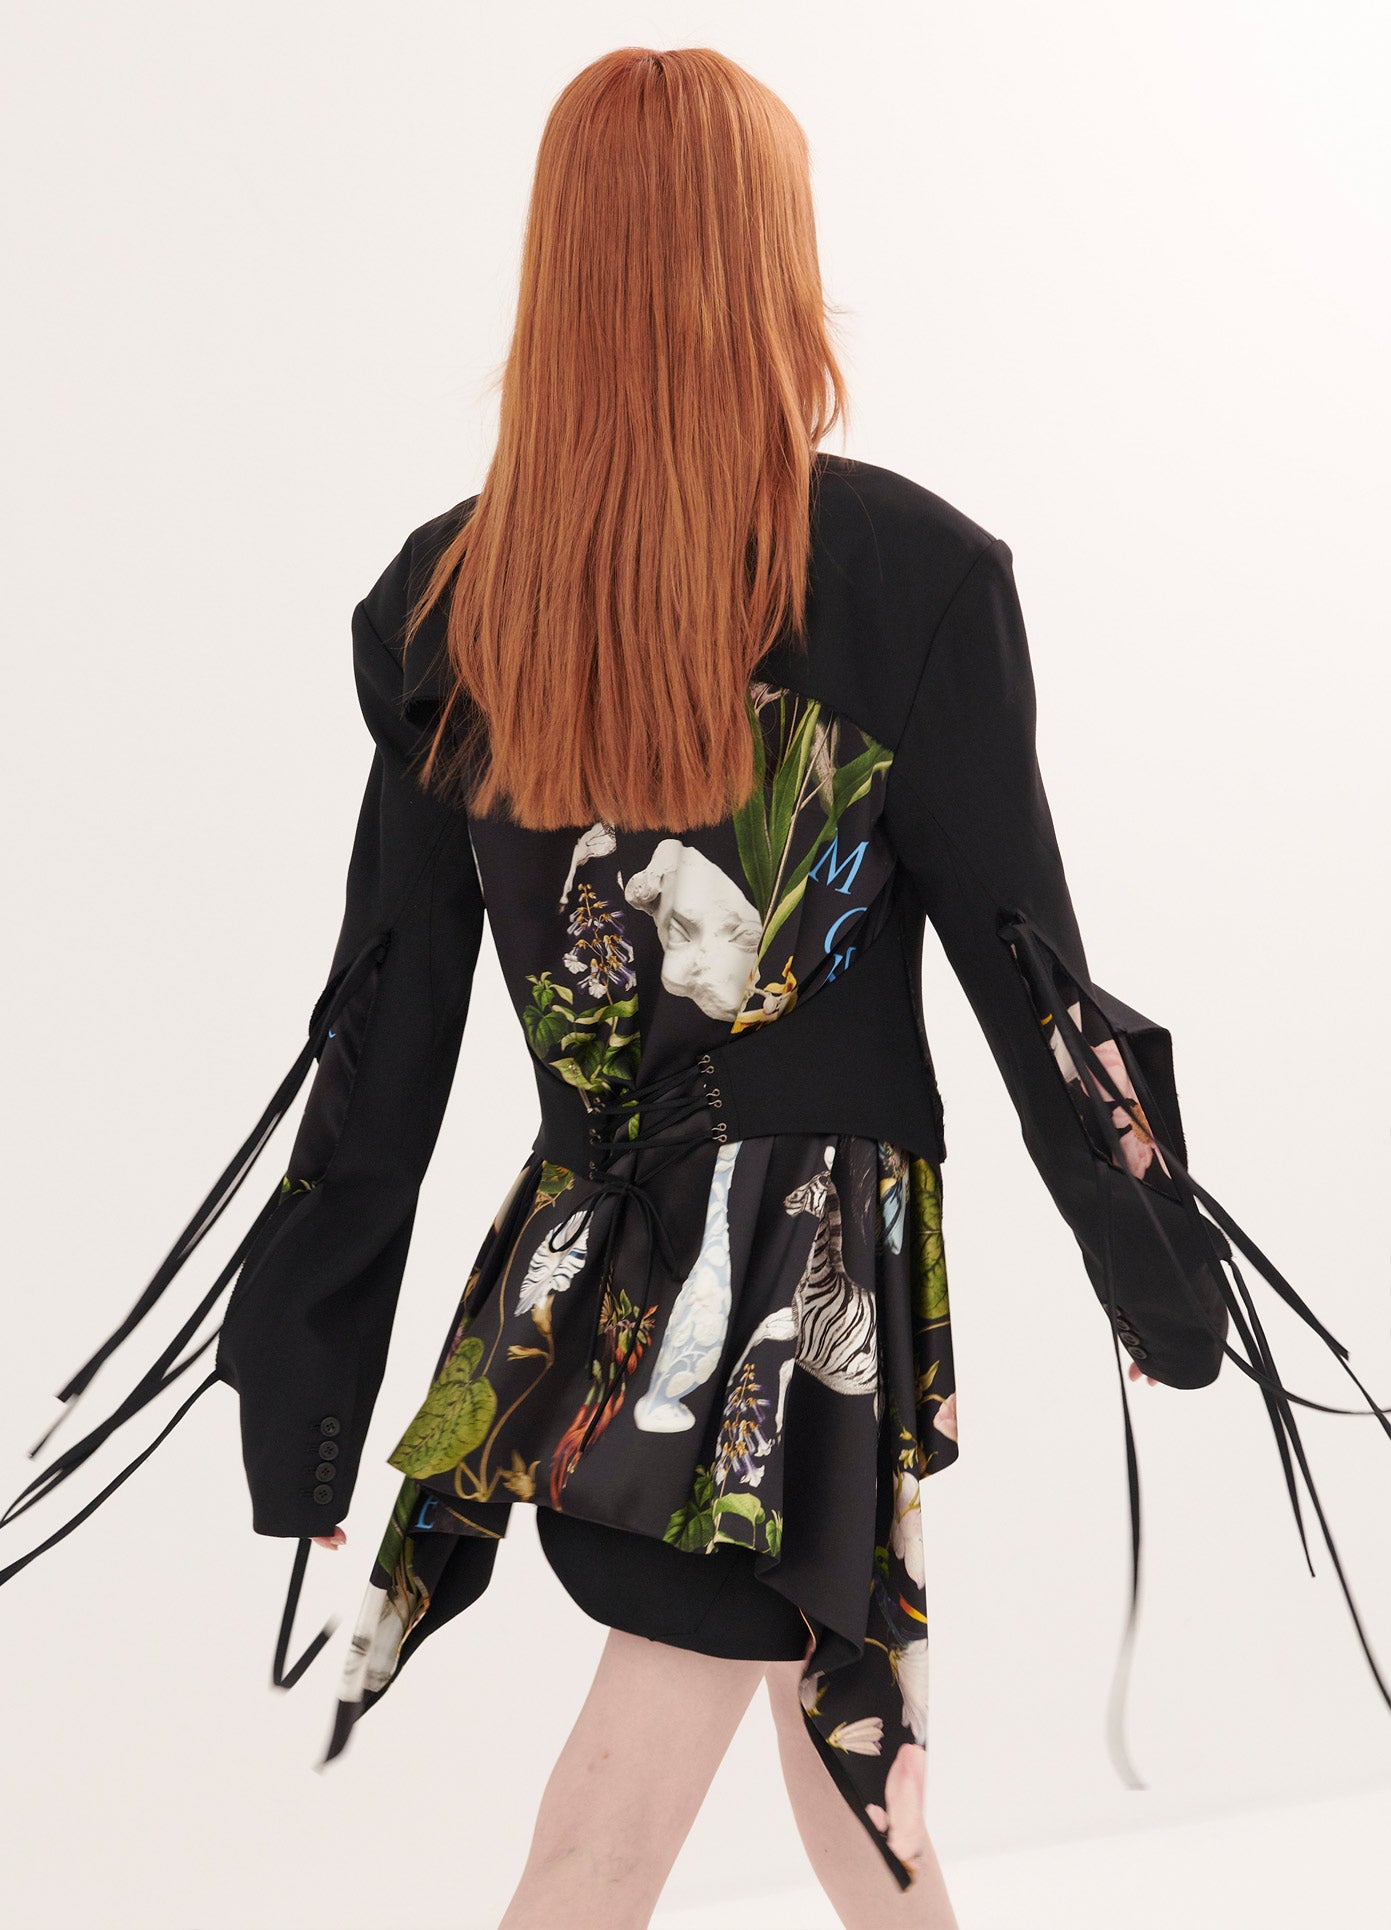 MONSE Print Detail Jacket in Black Print on Model Walking Back View